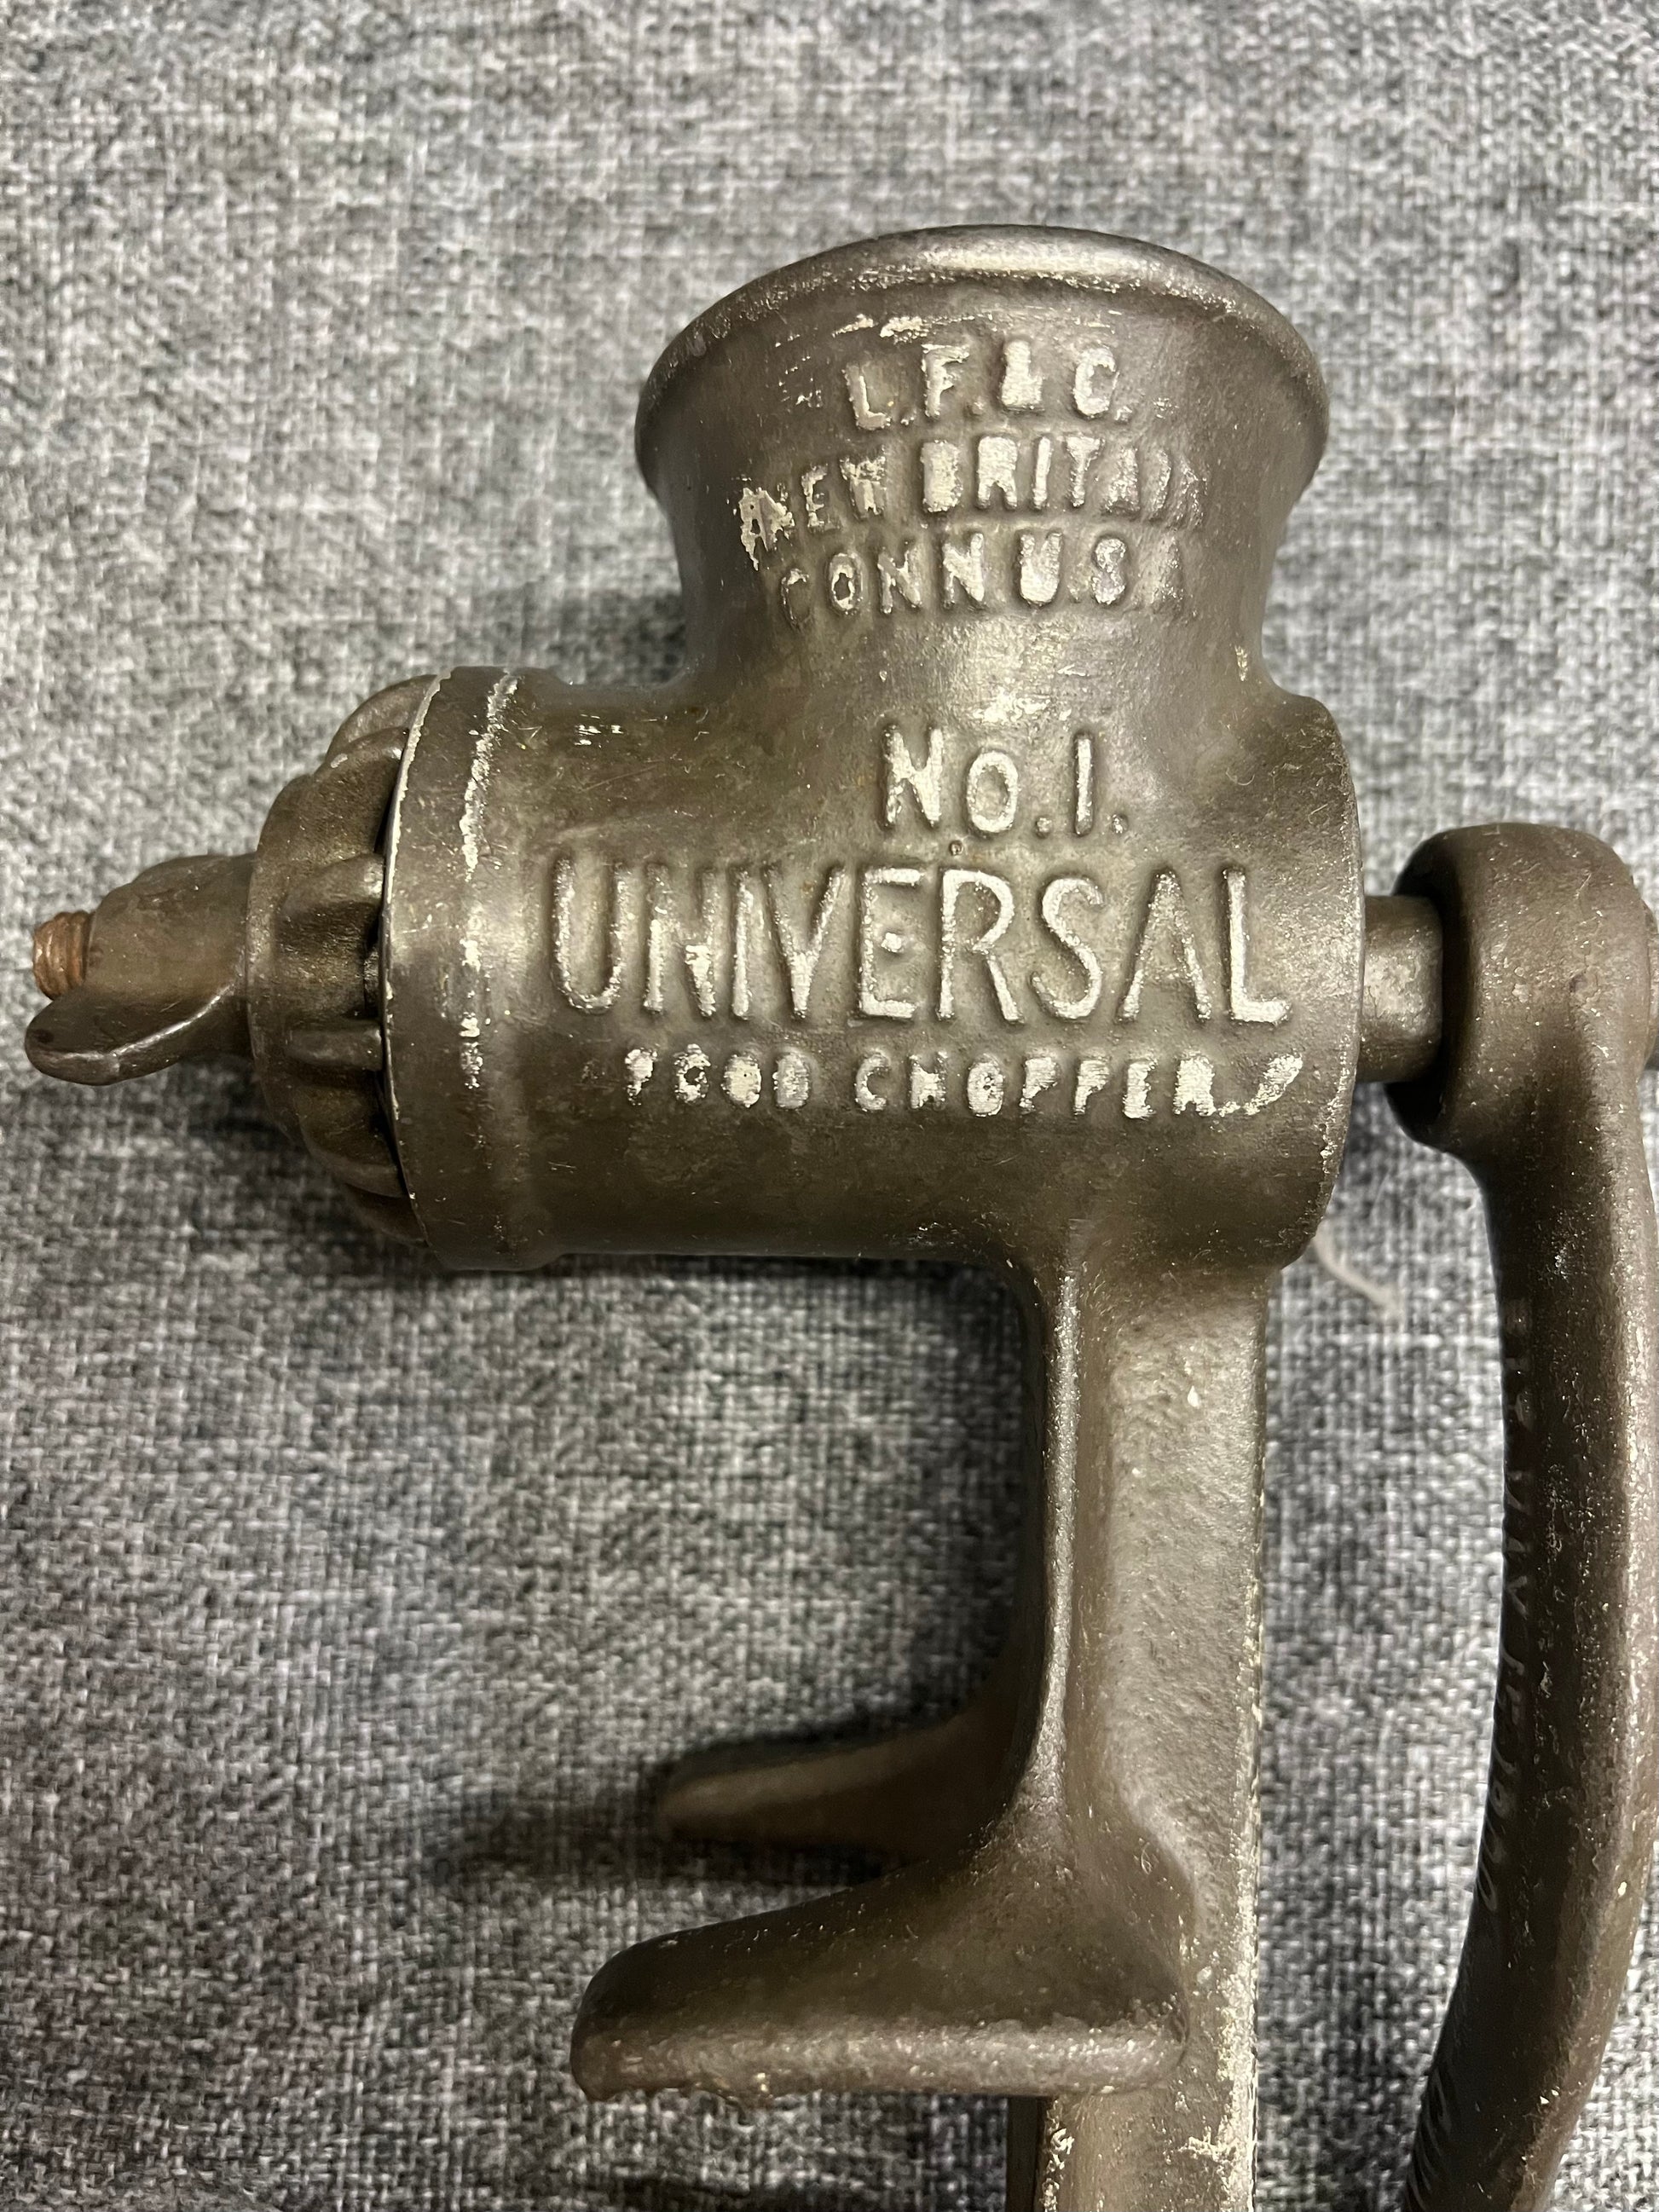 Antique Meat Grinder Universal No 1 Hand Crank Food Chopper 1897 